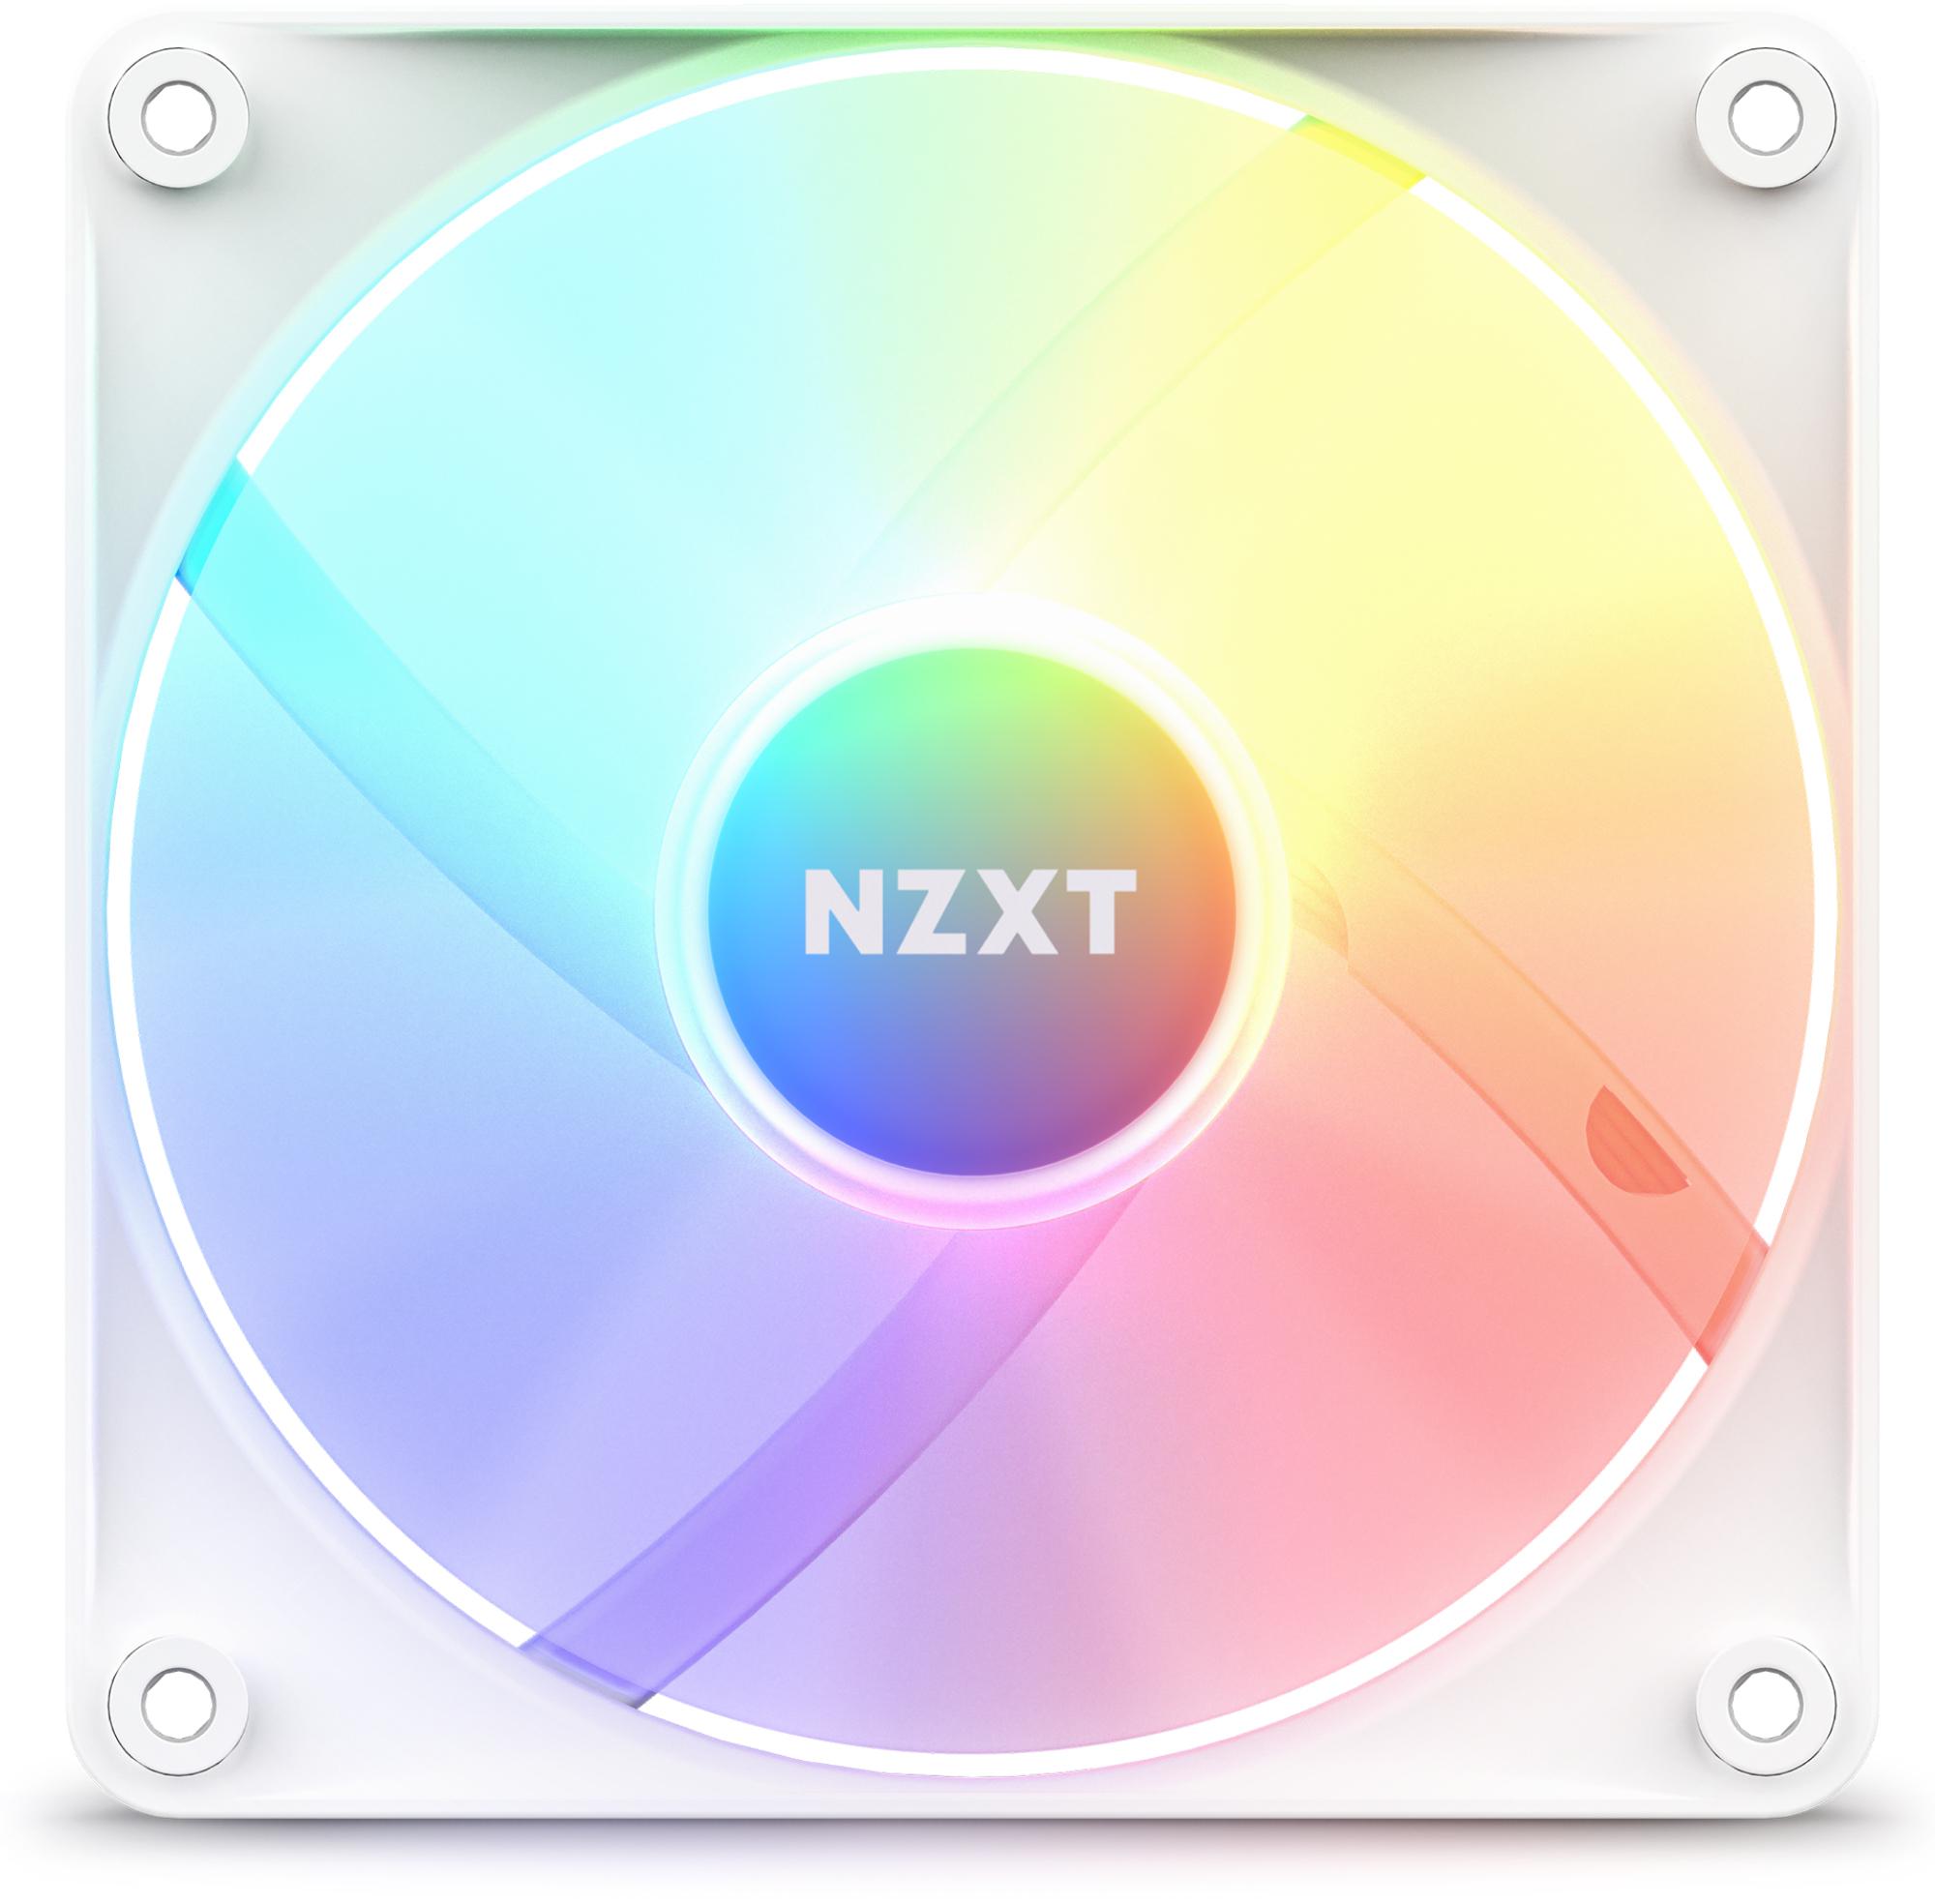 NZXT - Ventoinha NZXT F120 RGB CORE 120mm Branco